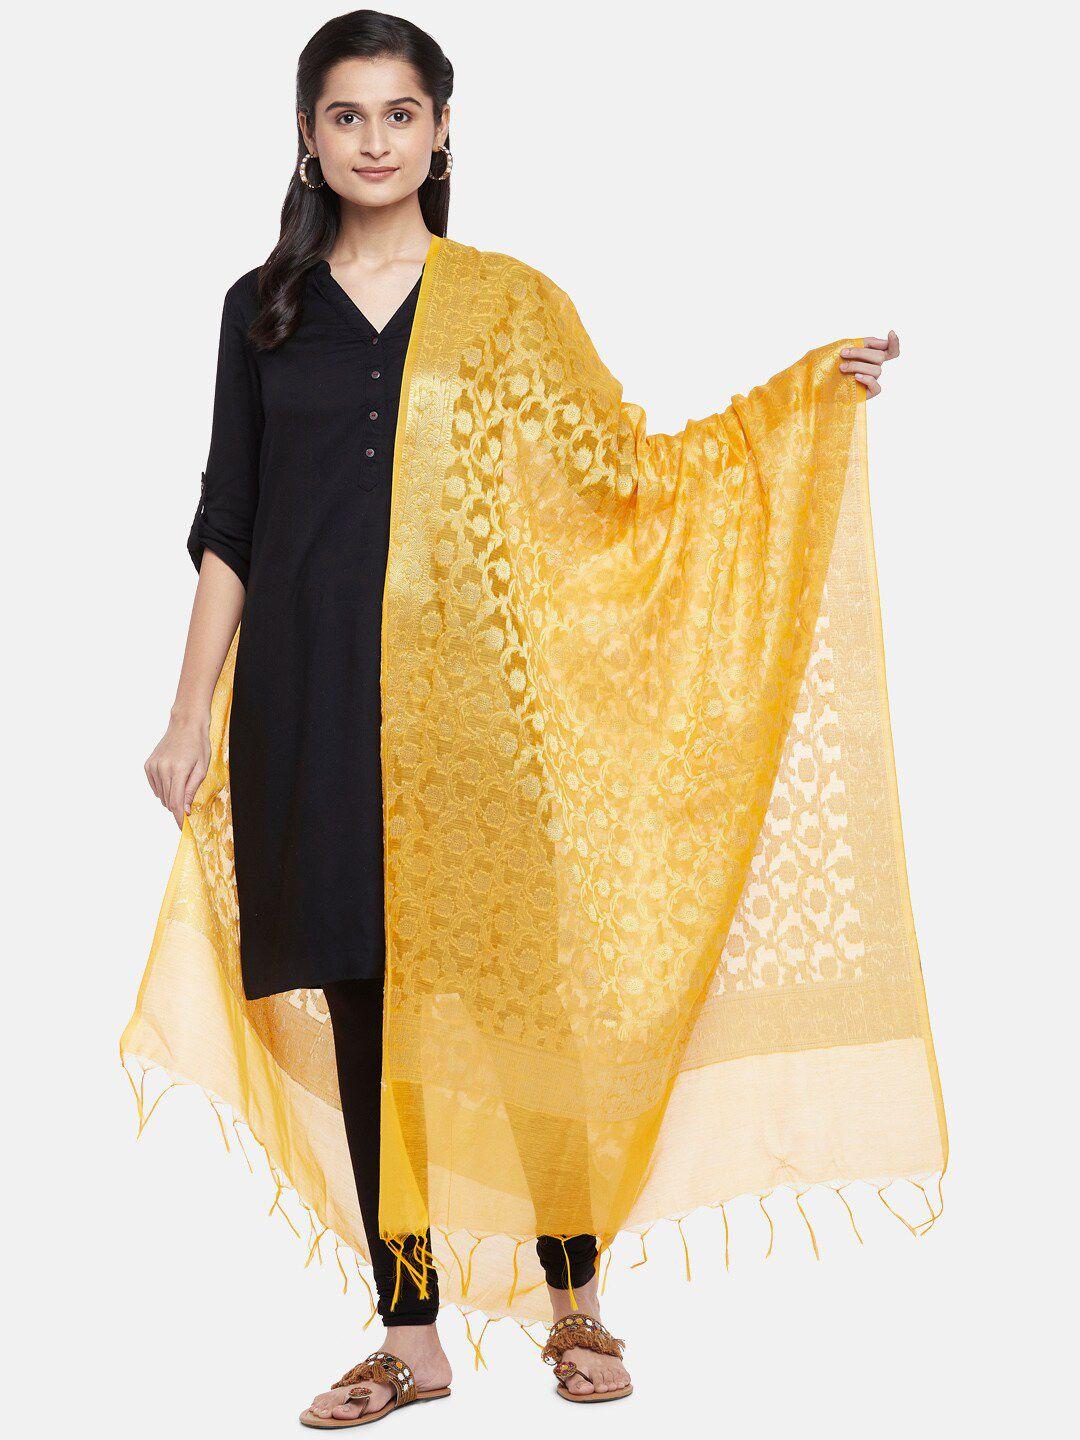 rangmanch by pantaloons women yellow floral woven design pure silk dupatta